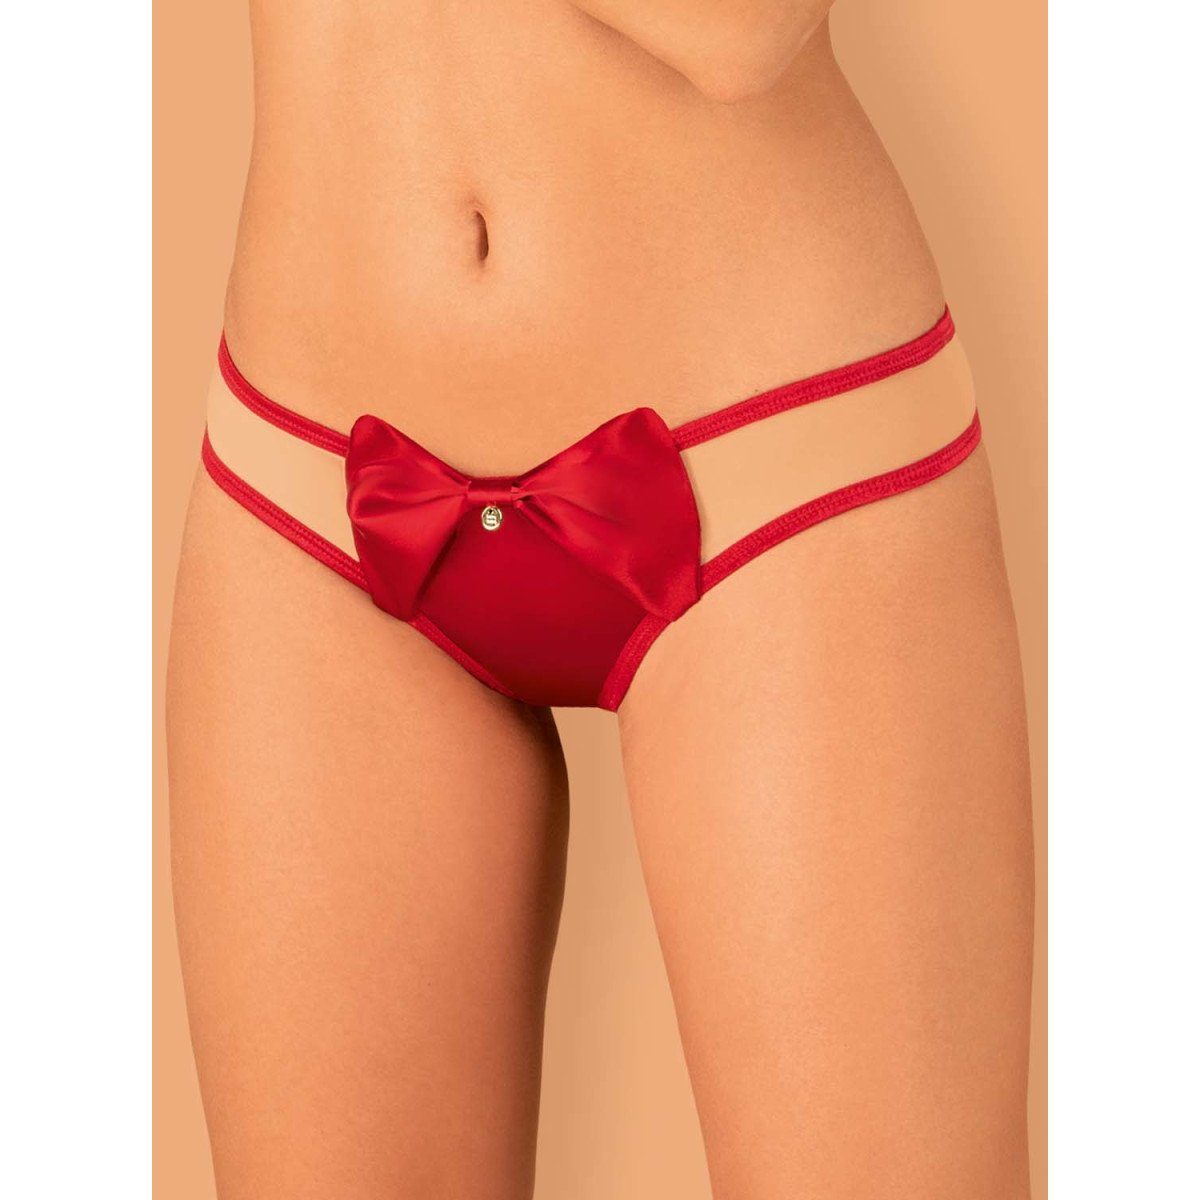 Rubinesa Panty OB Obsessive red - thong (L/XL,S/M)